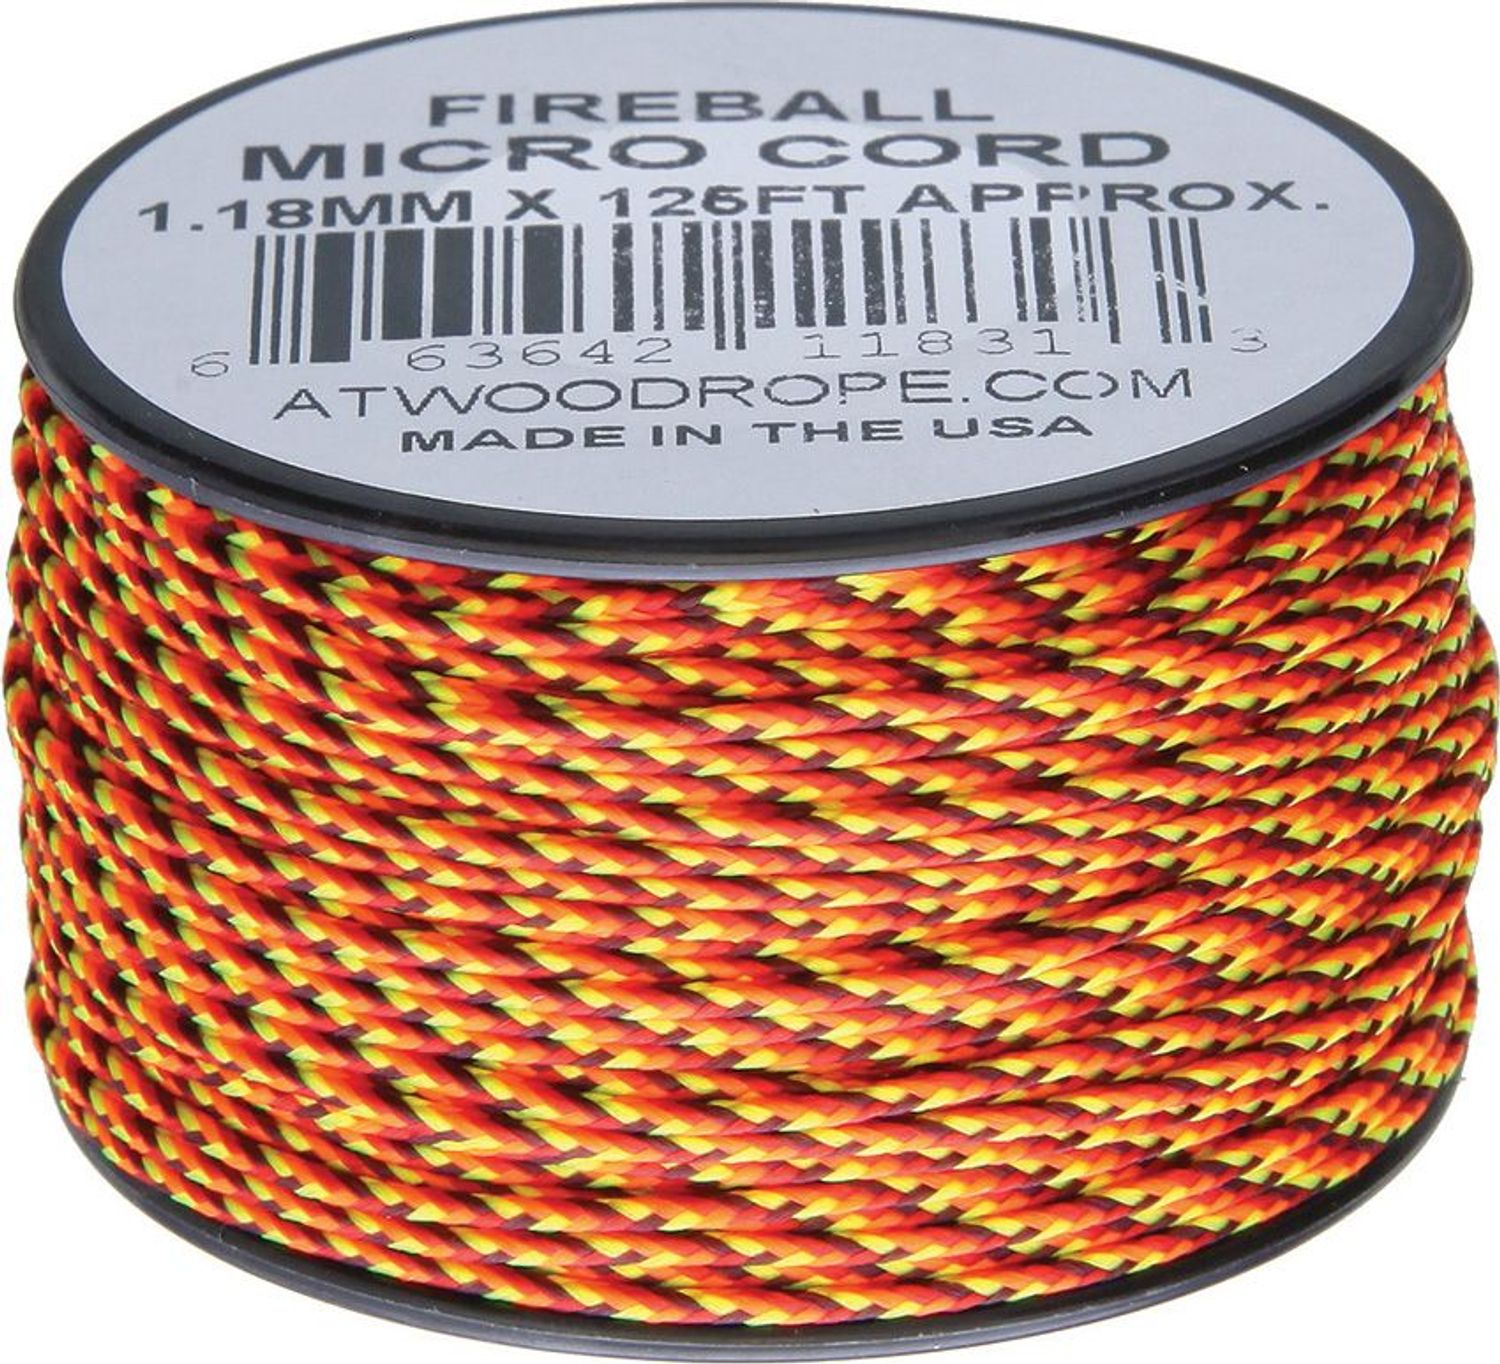 Atwood Rope Micro Cord, Fireball, 125 Feet - KnifeCenter - RG1262